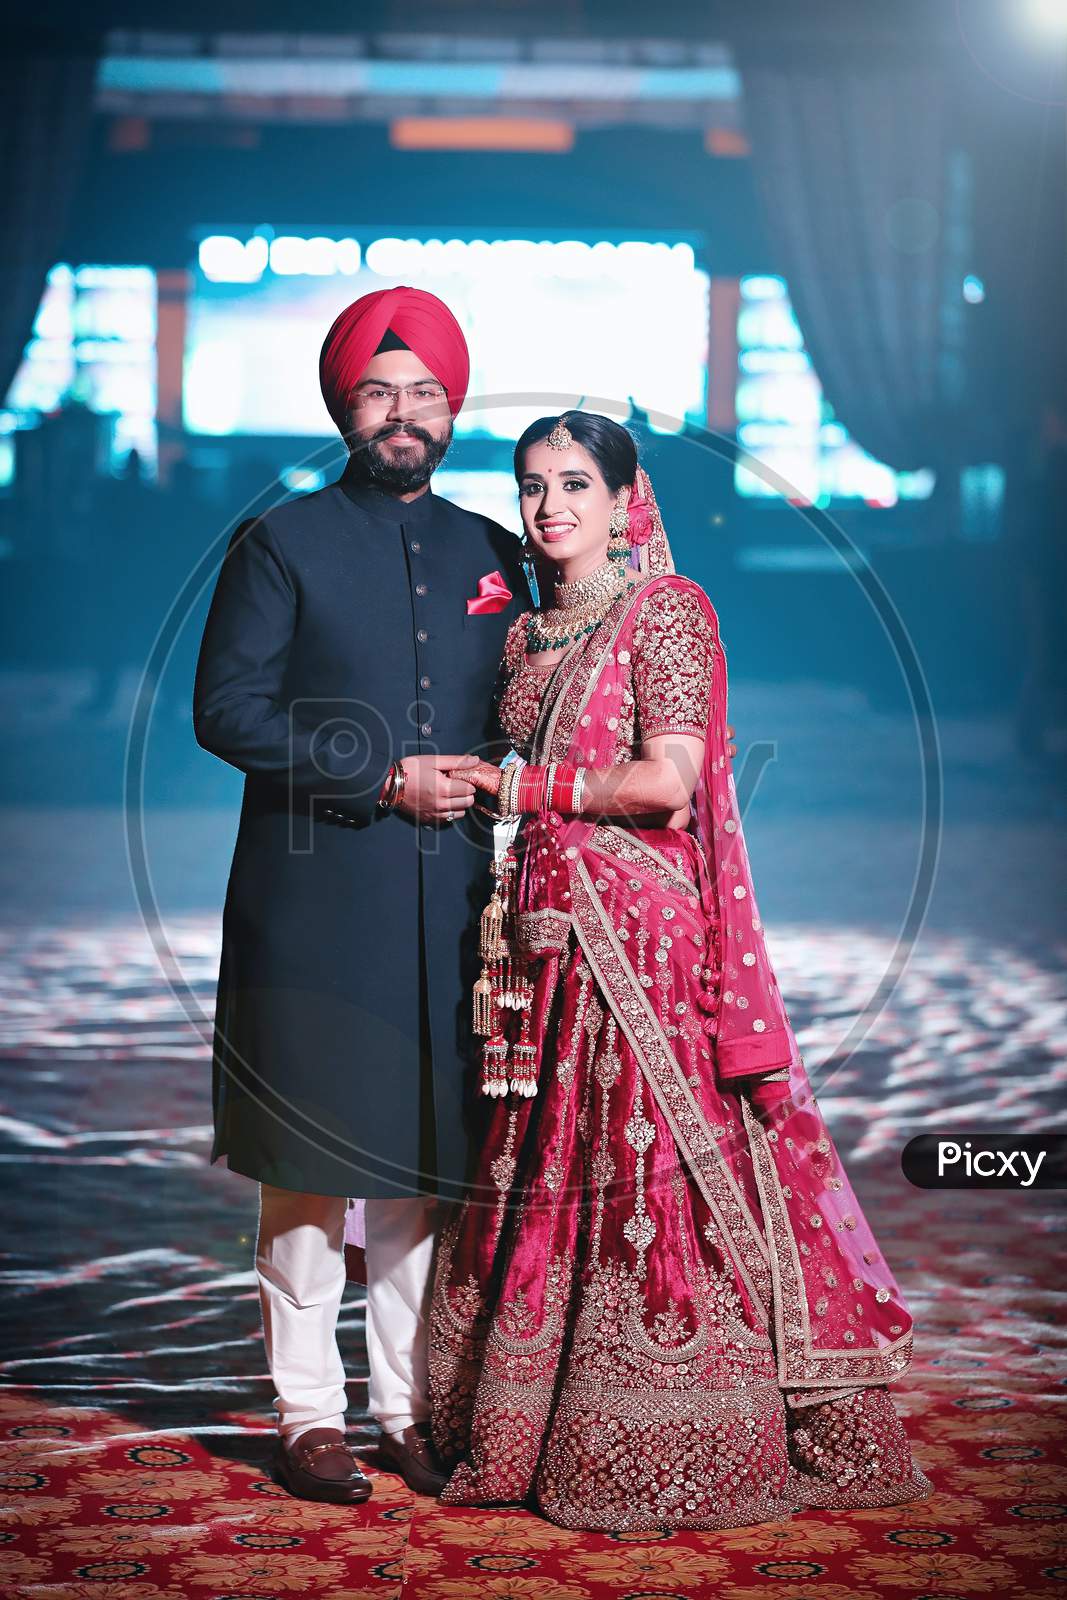 New shadi dresess lehnga choli for wedding collection of new year 2020-2021  | Indian wedding poses, Indian wedding photography poses, Indian bride